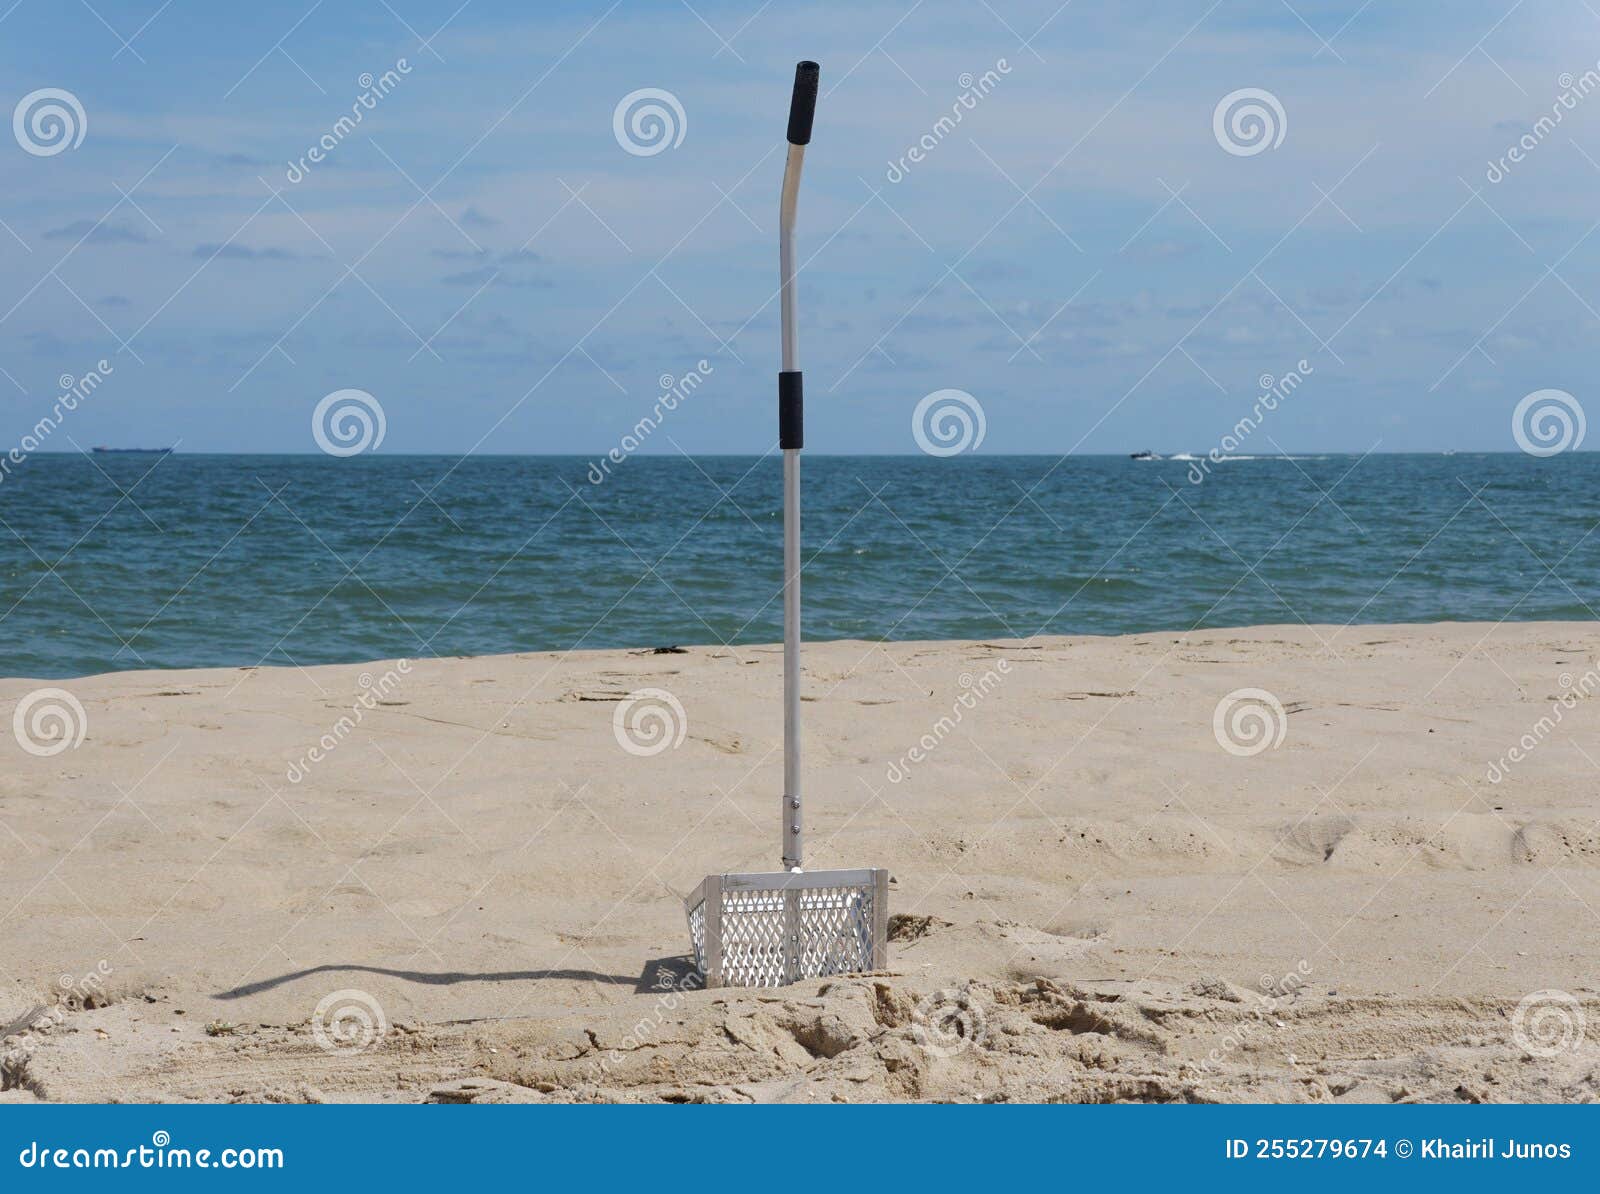 A Metal Sand Fleas Rake by the Beach Stock Photo - Image of beach, bait:  255279674